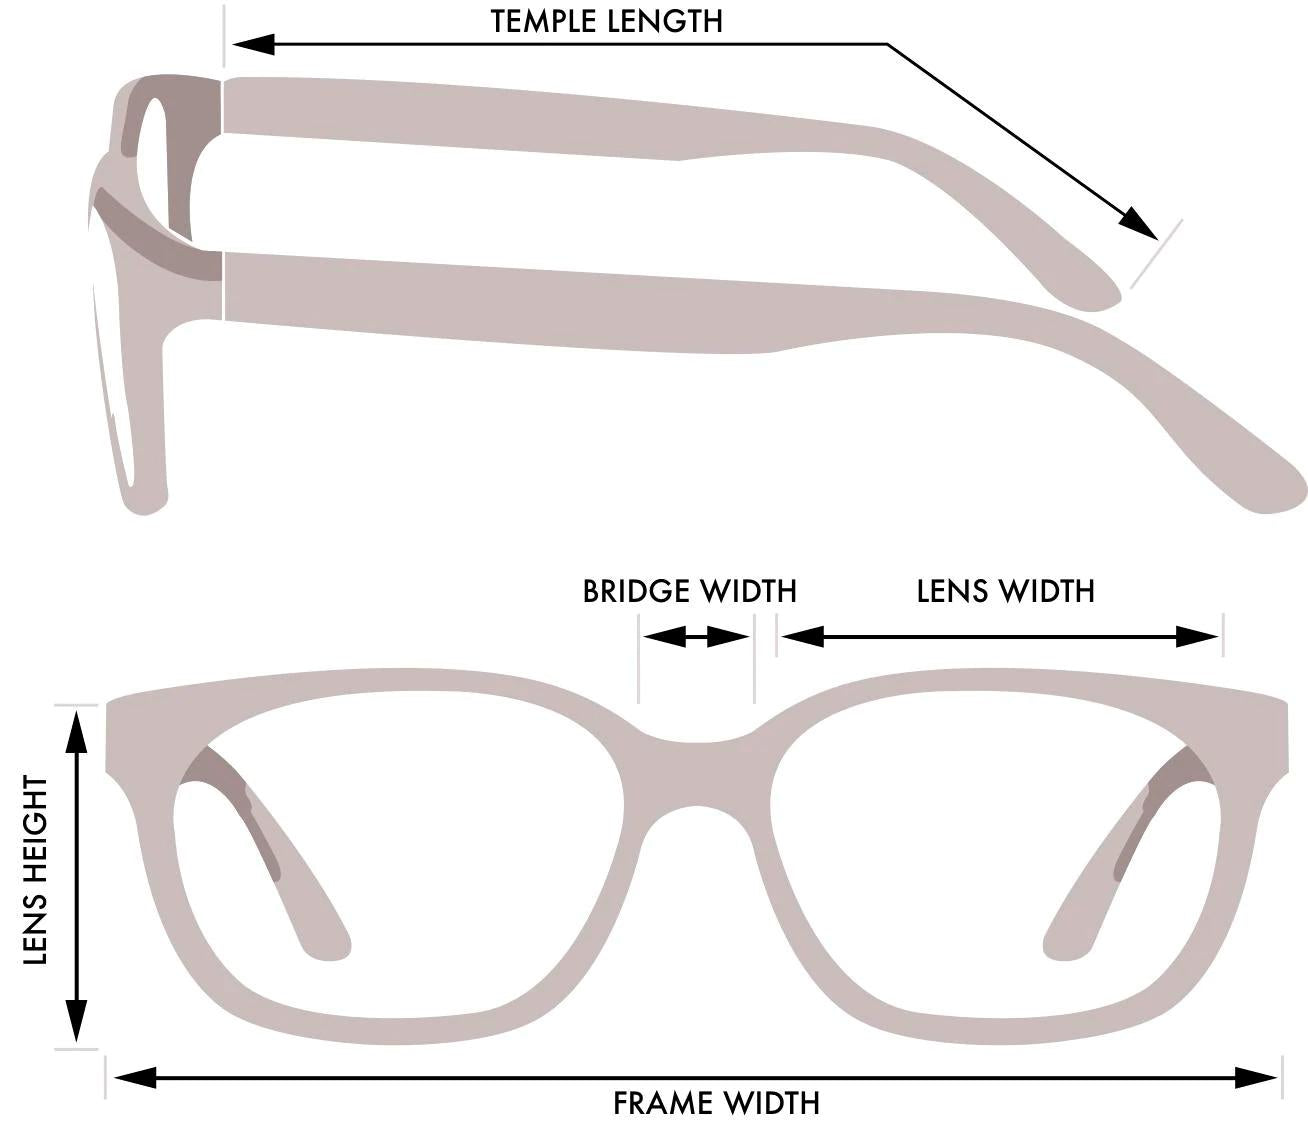 Locs Oval sunglasses black/mirror - Shop-Tetuan